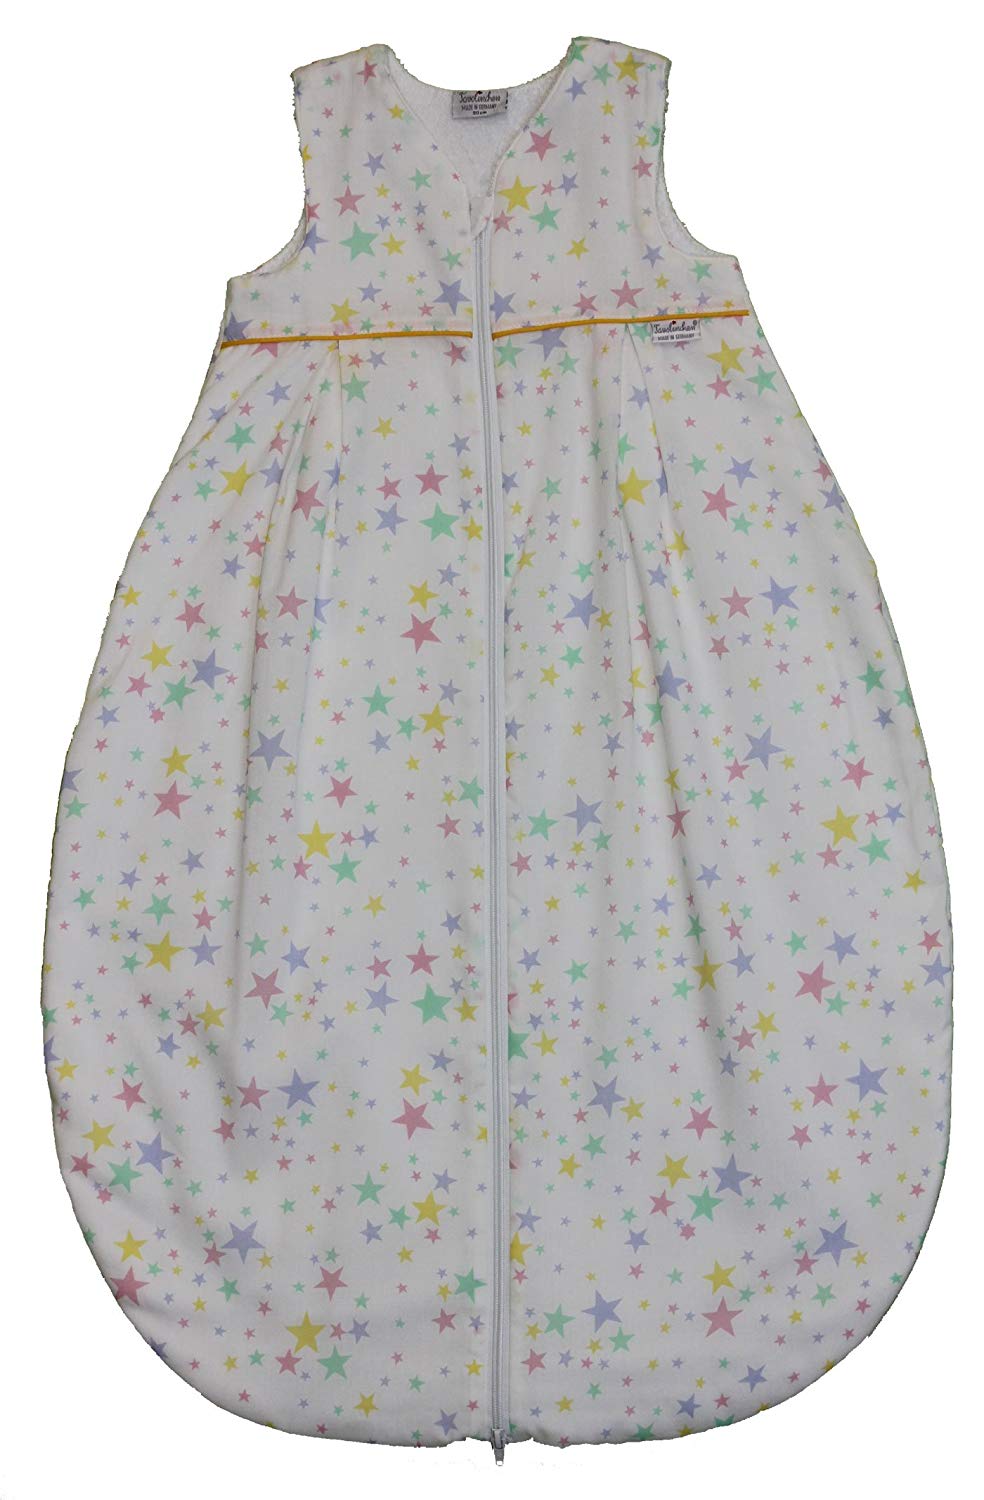 Tavolinchen 35/1585 Terry Cloth Stars Sleeping Bag 110 cm 90 cm original